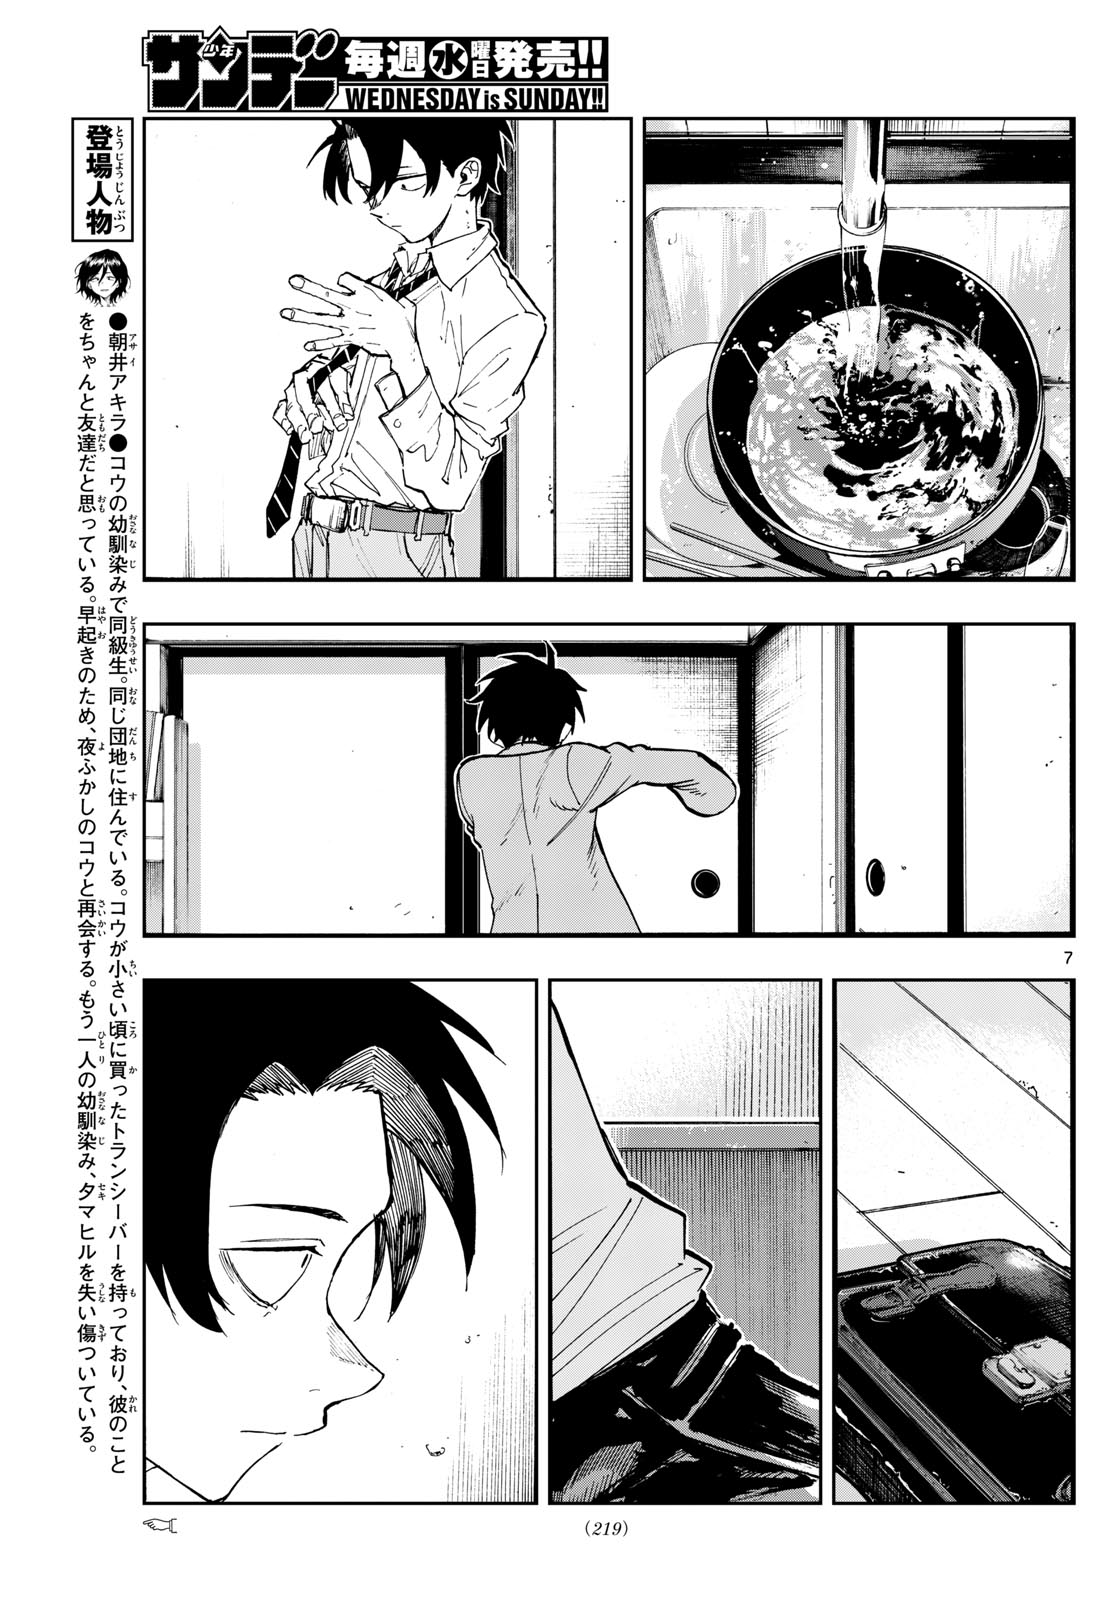 Yofukashi no Uta Chapter 186 – Rawkuma